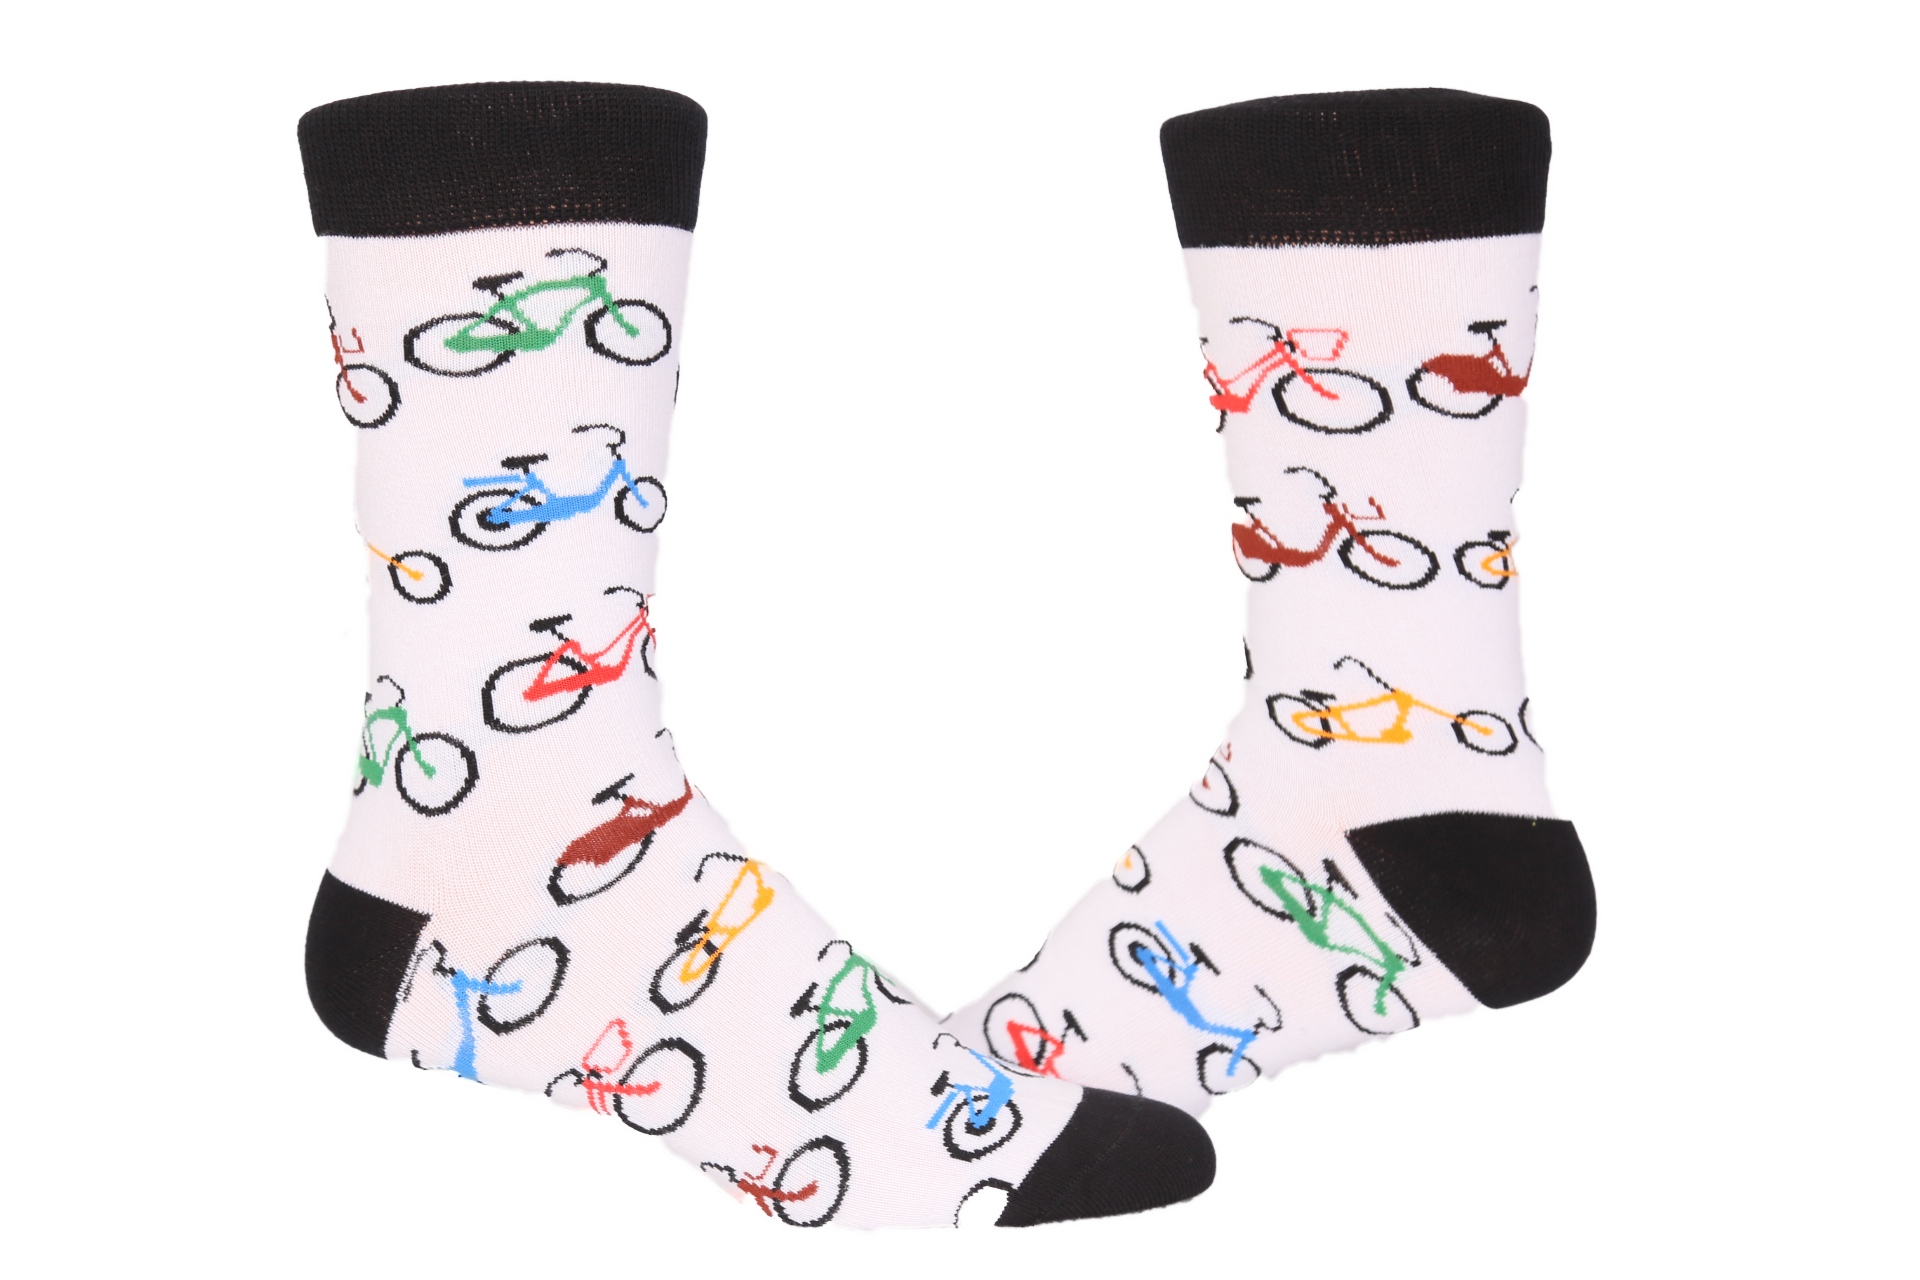 Sole Cycle - Upscale Socks